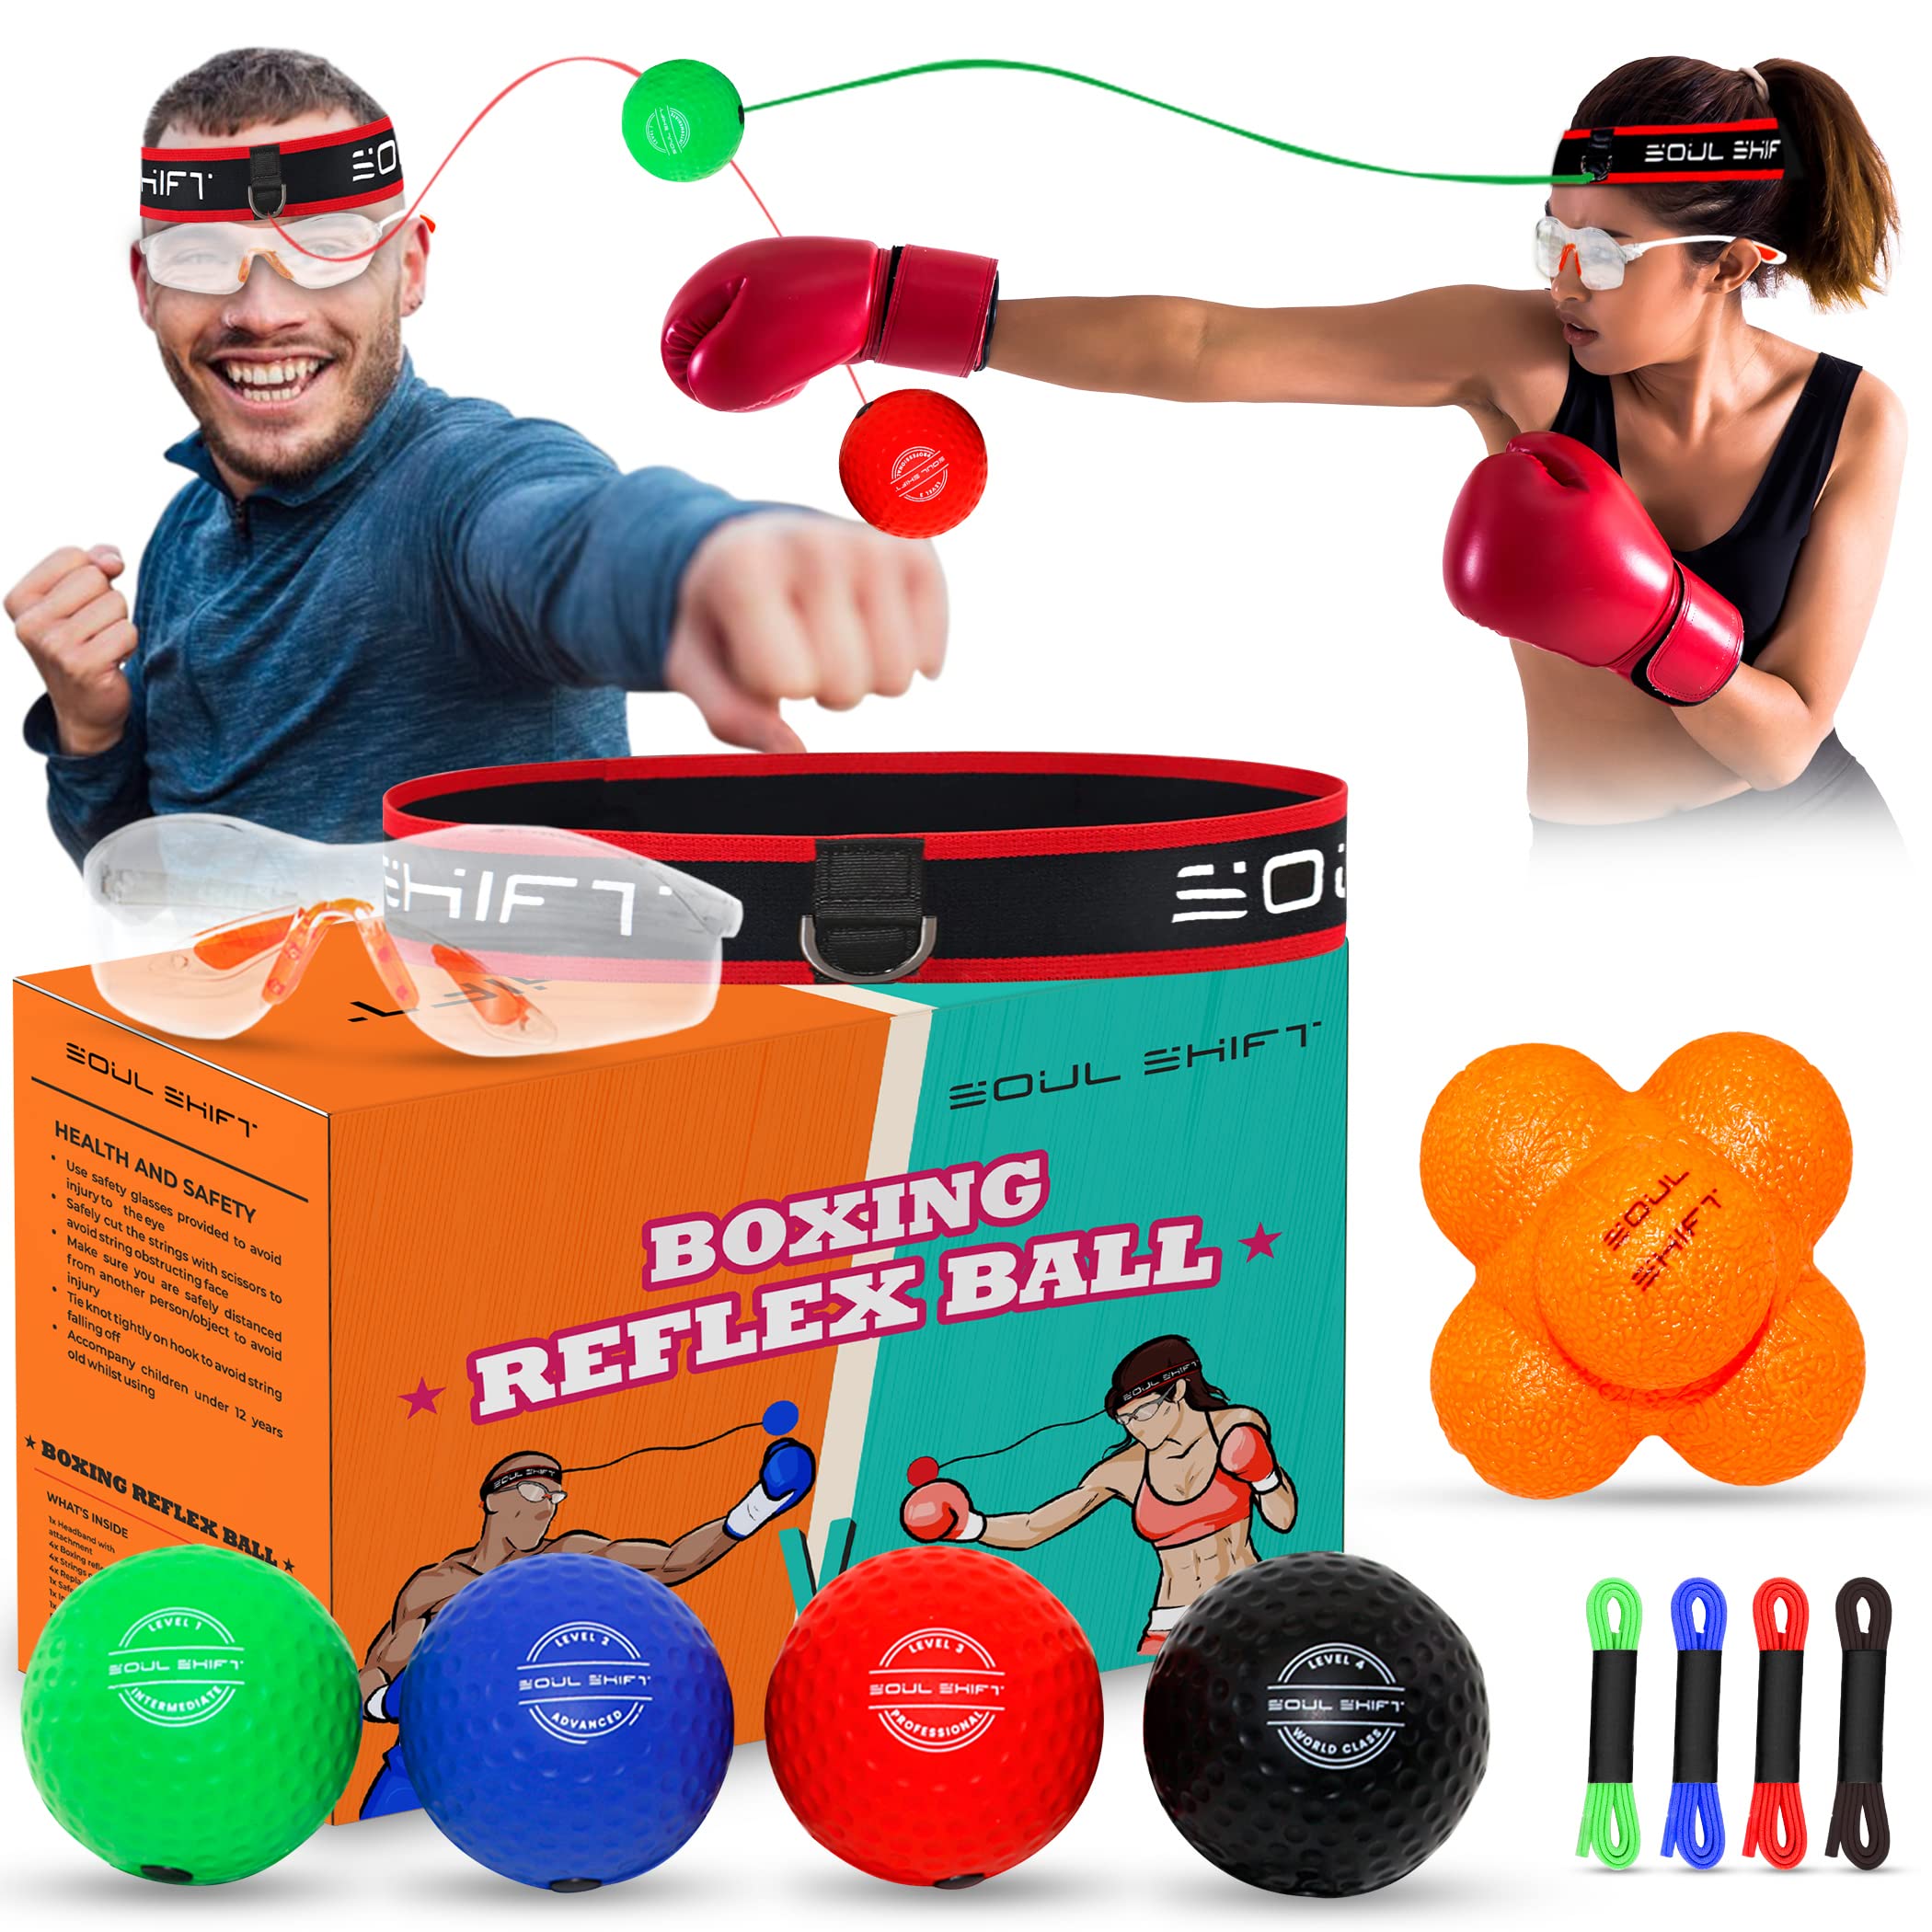 Boxing reflex training ball